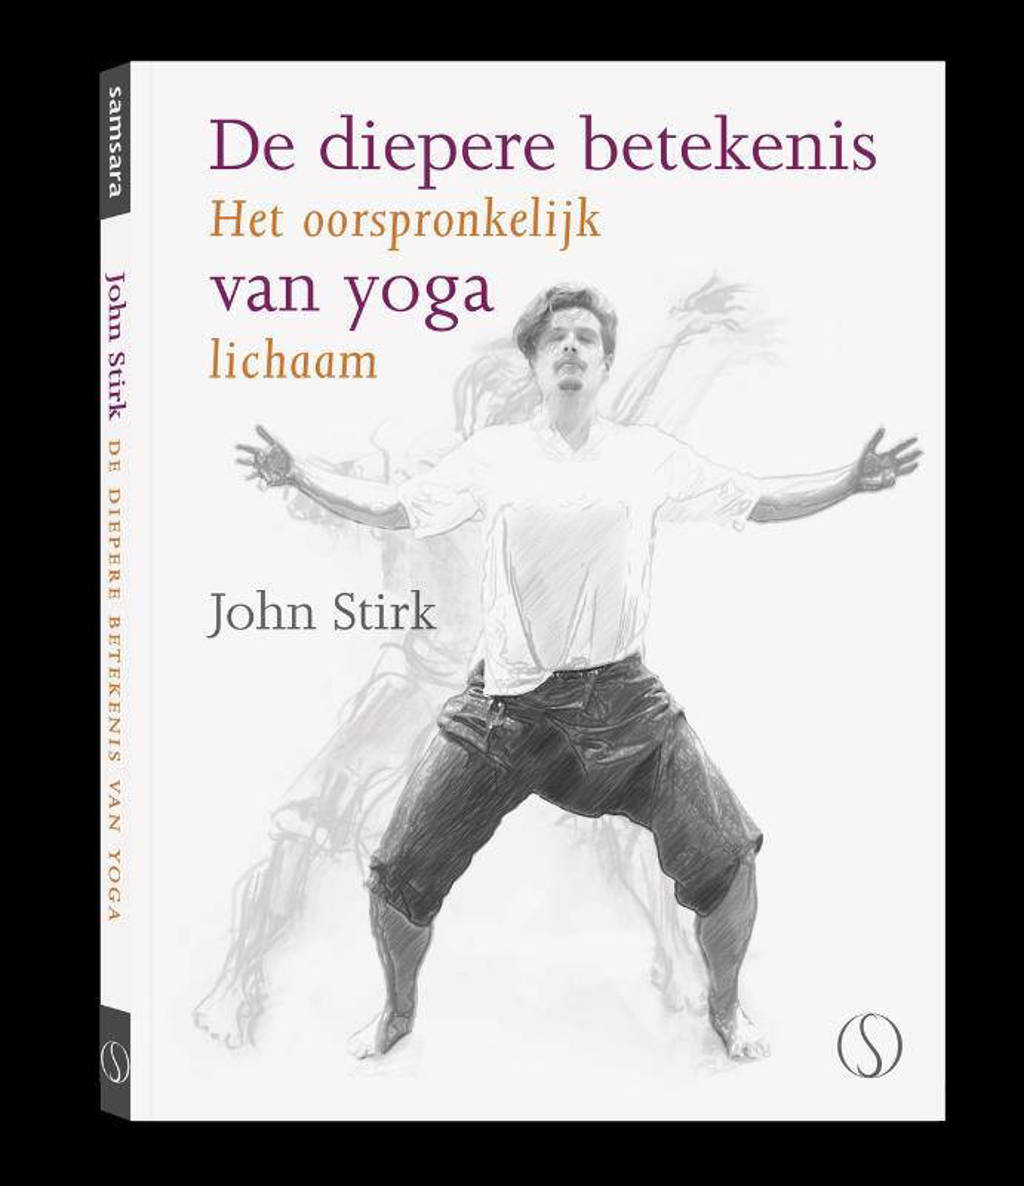 De diepere betekenis van yoga - John Stirk